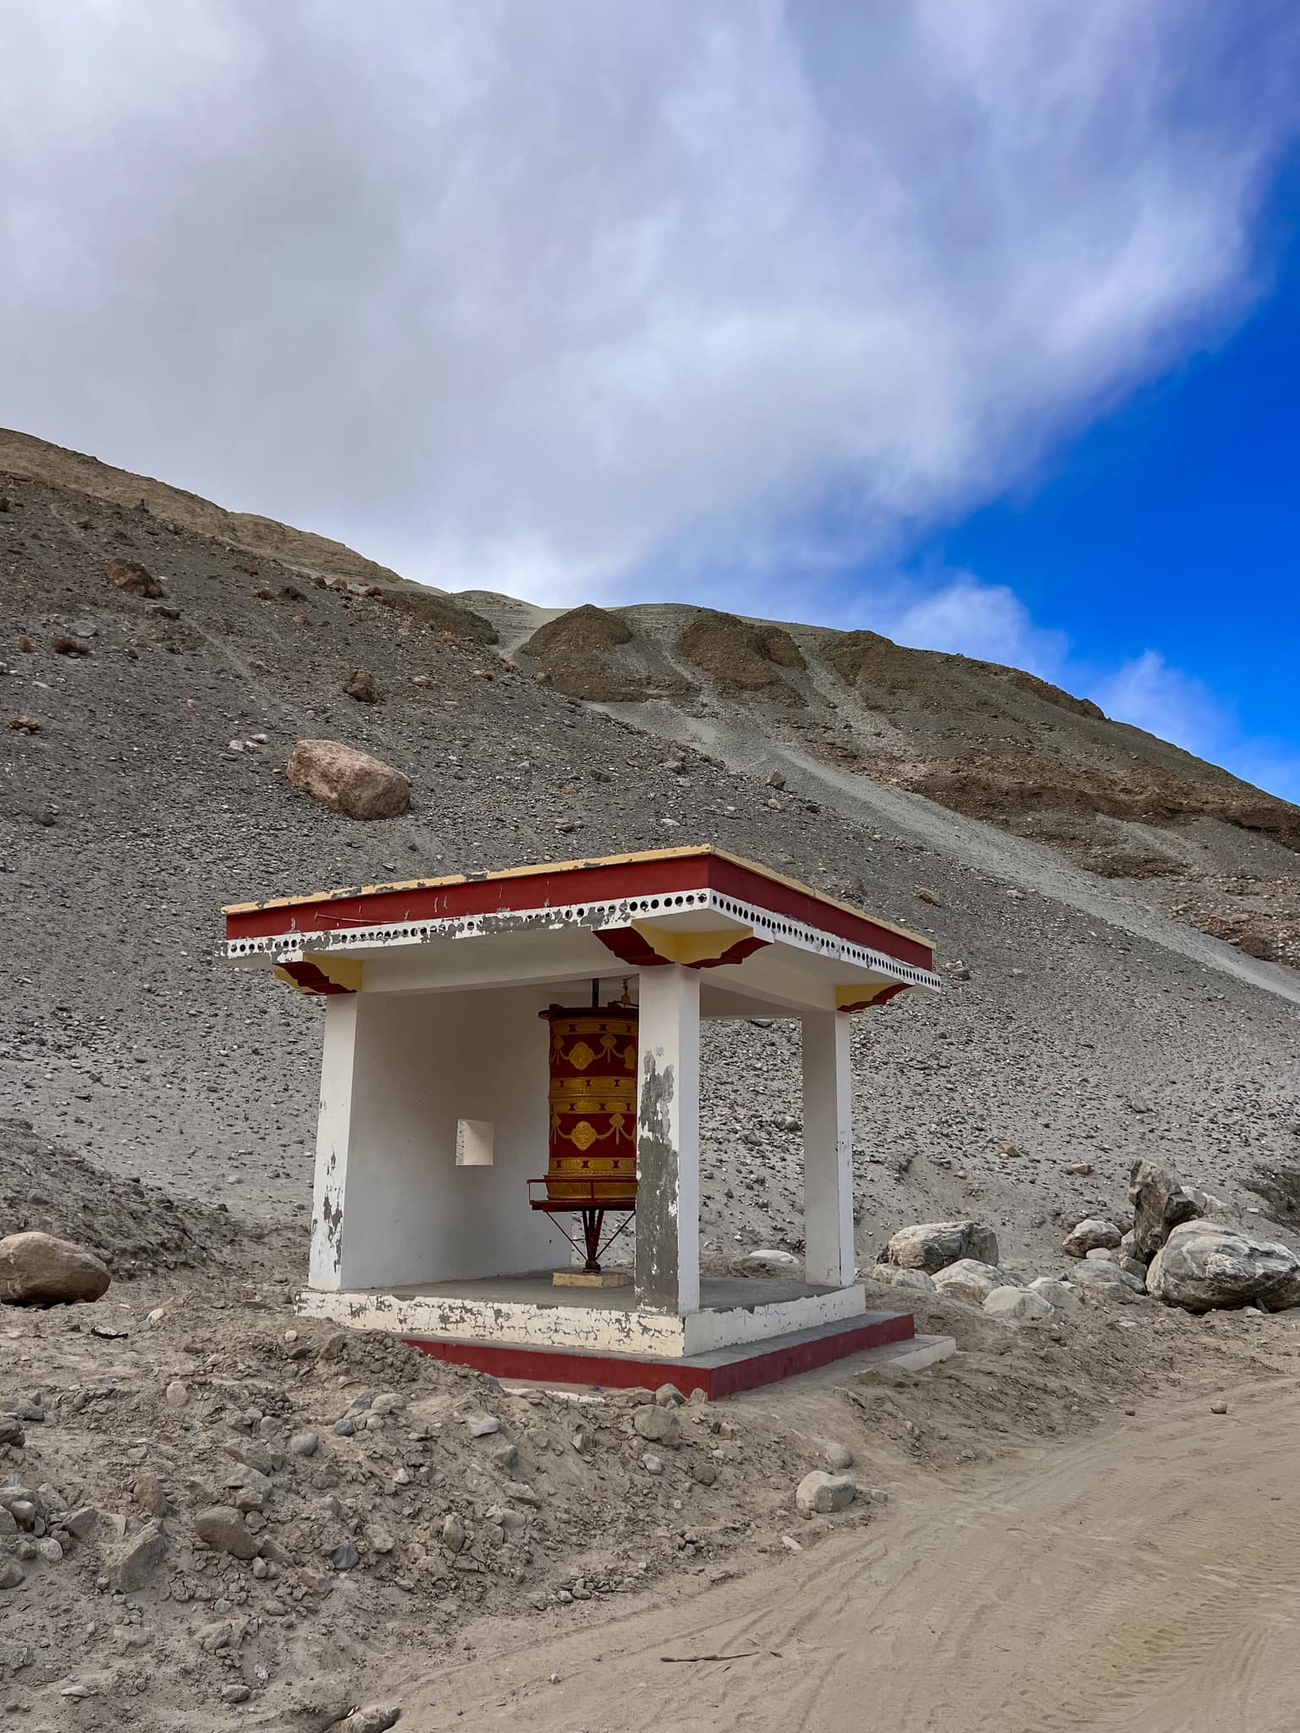 Omar Di Felice, Alone in Ladakh